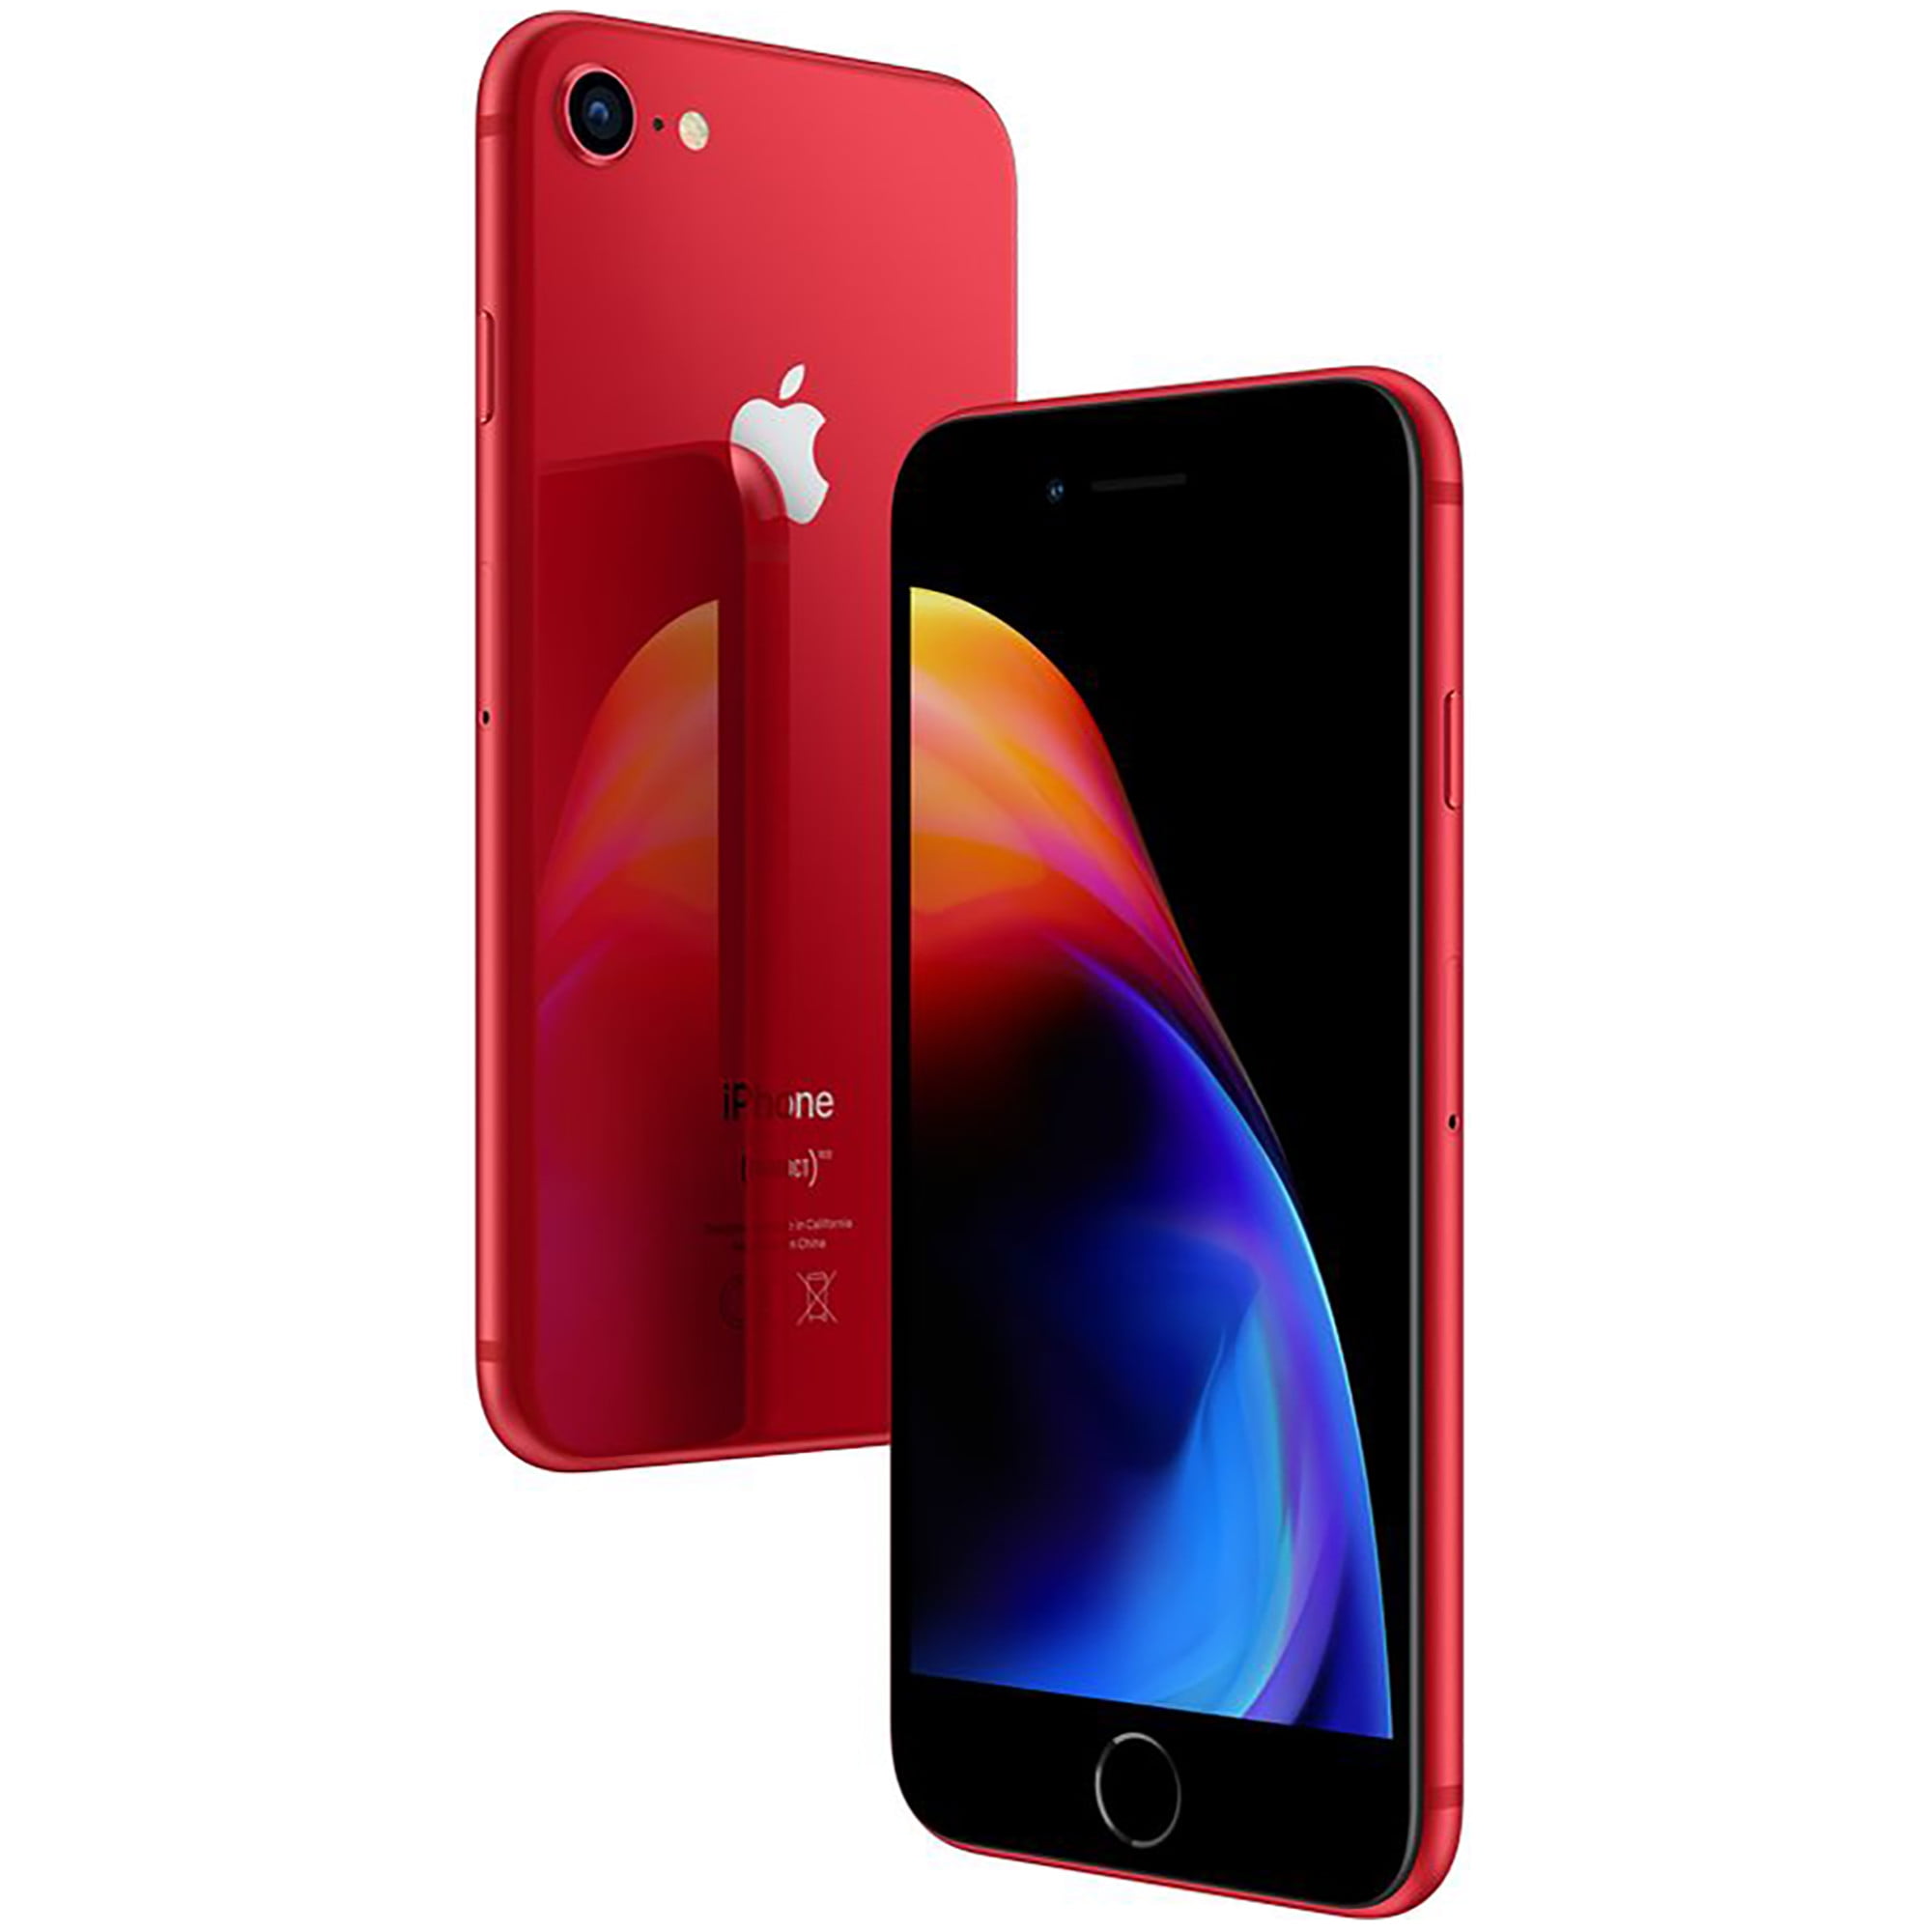 Apple iPhone 8 64GB Unlocked GSM 4G LTE Phone w/ 12MP Camera - Red - B  Grade Used